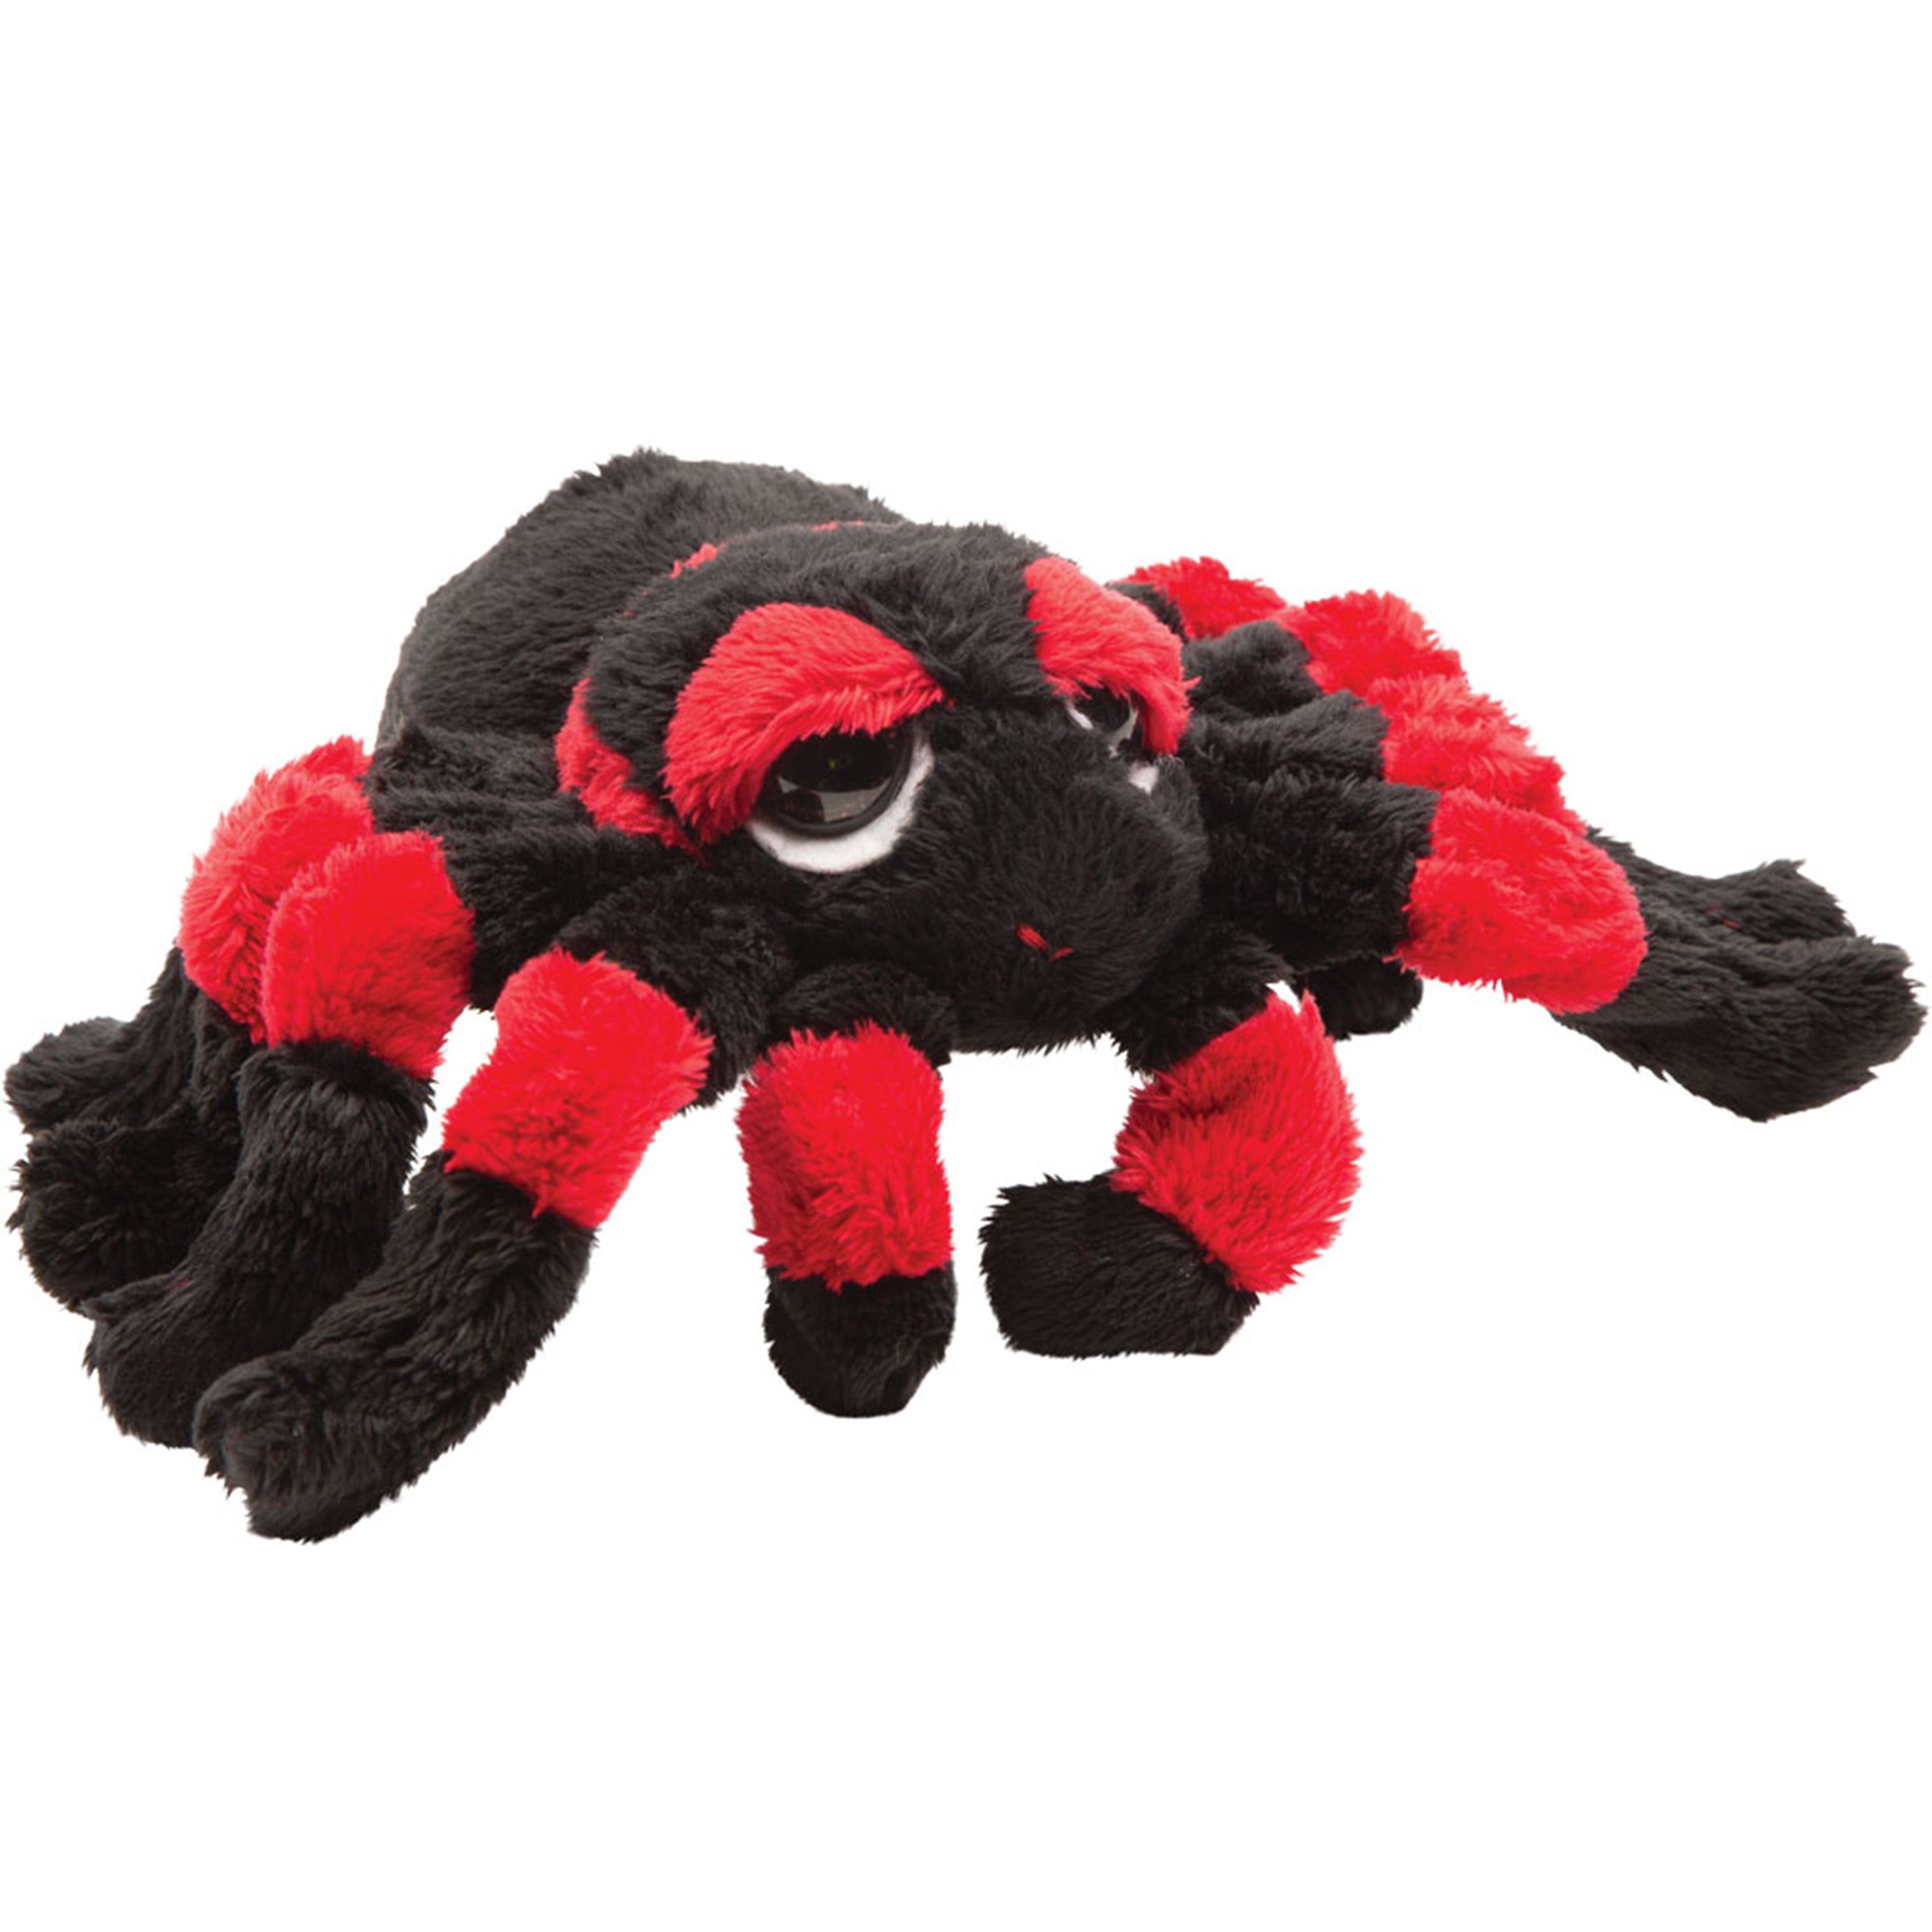 Pluche knuffel spin - tarantula - zwart/rood - 13 cm - speelgoed -